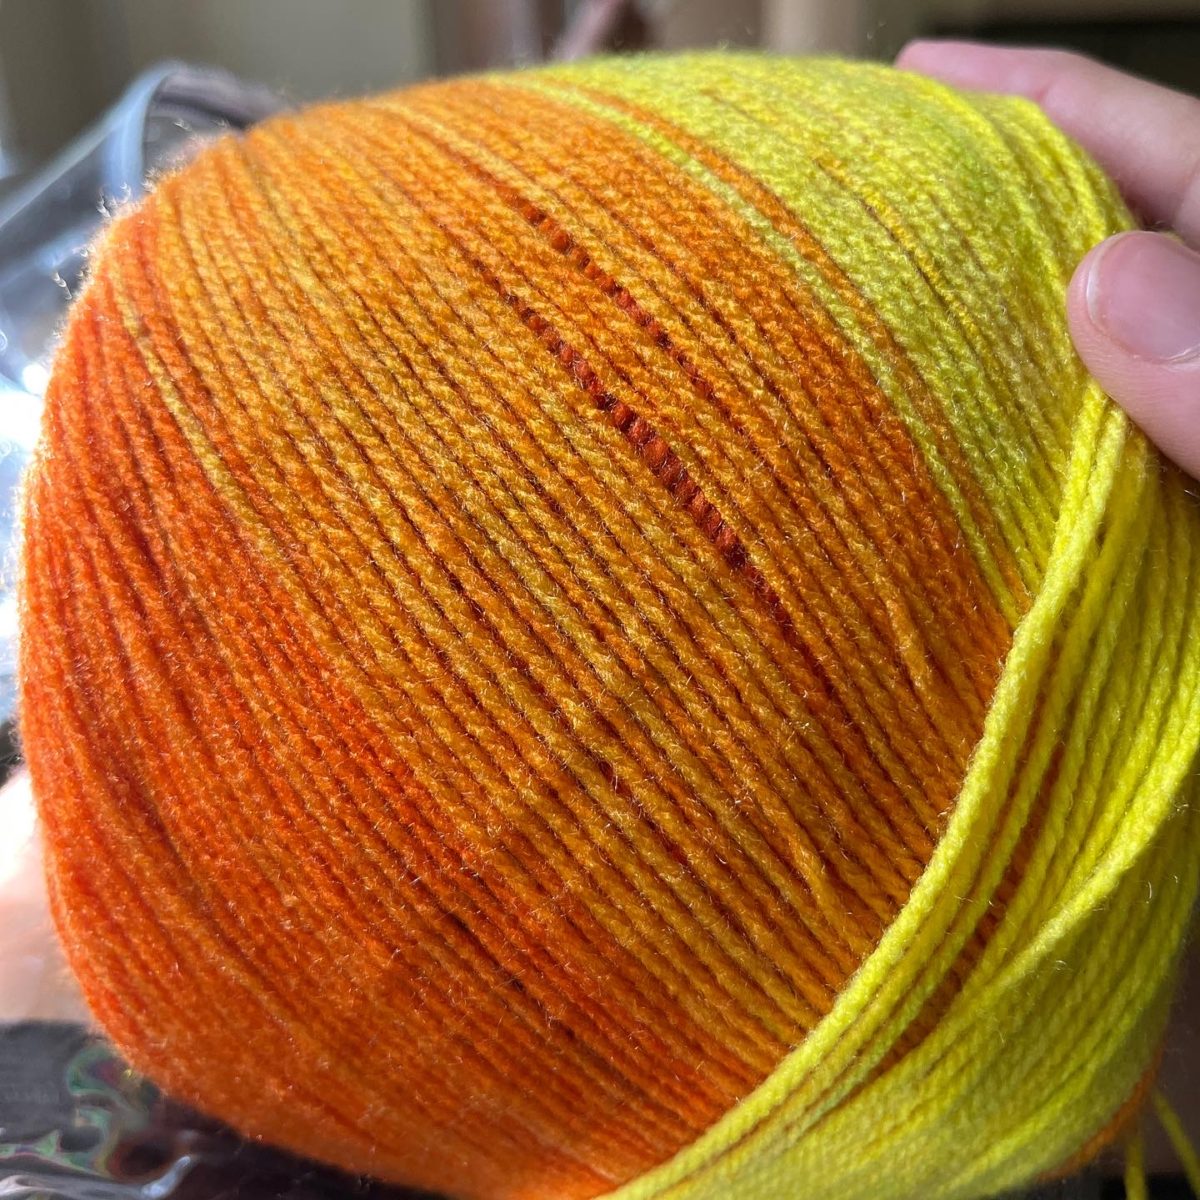 a cake of rainbow yarn: Caron Skinny Cakes yarn in Rainbow